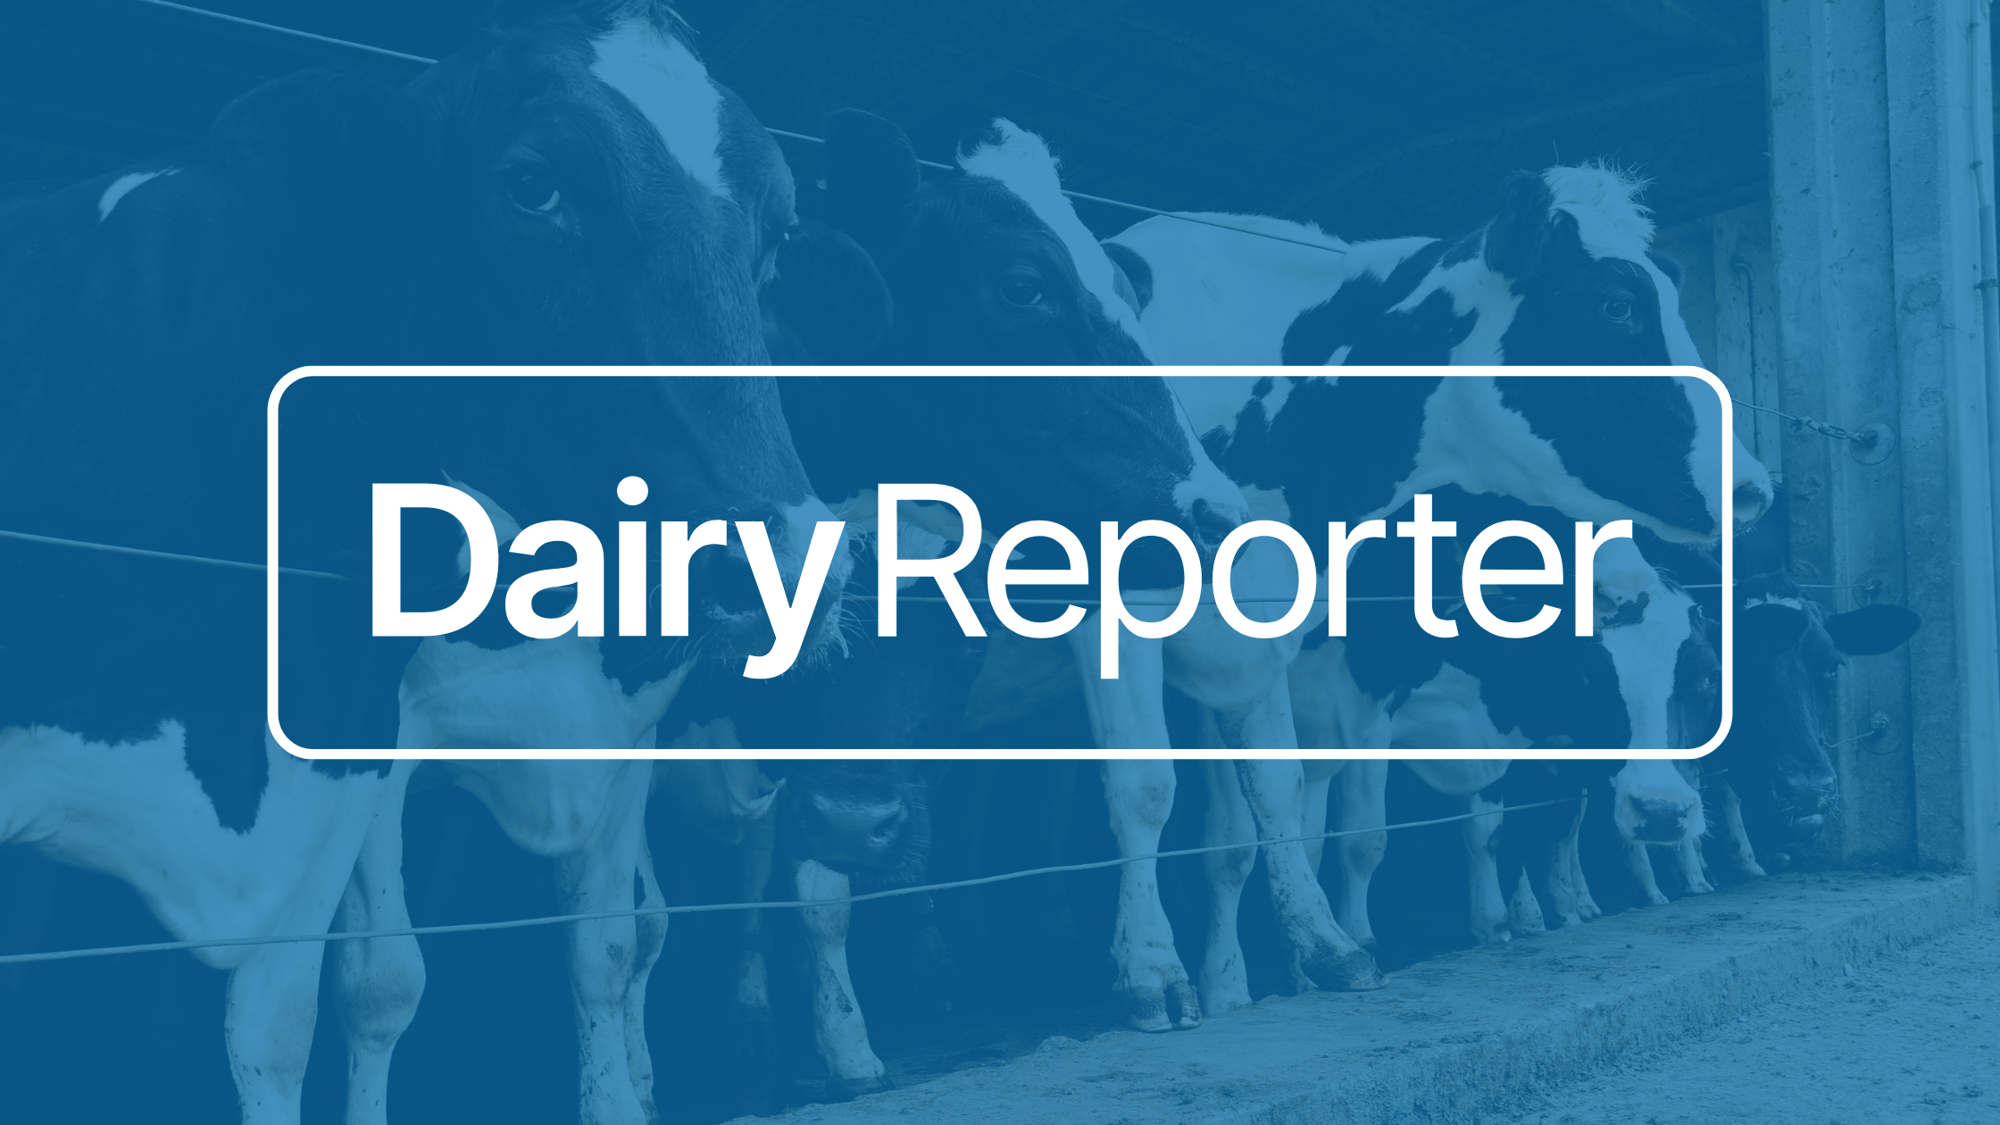 Dairy Reporter